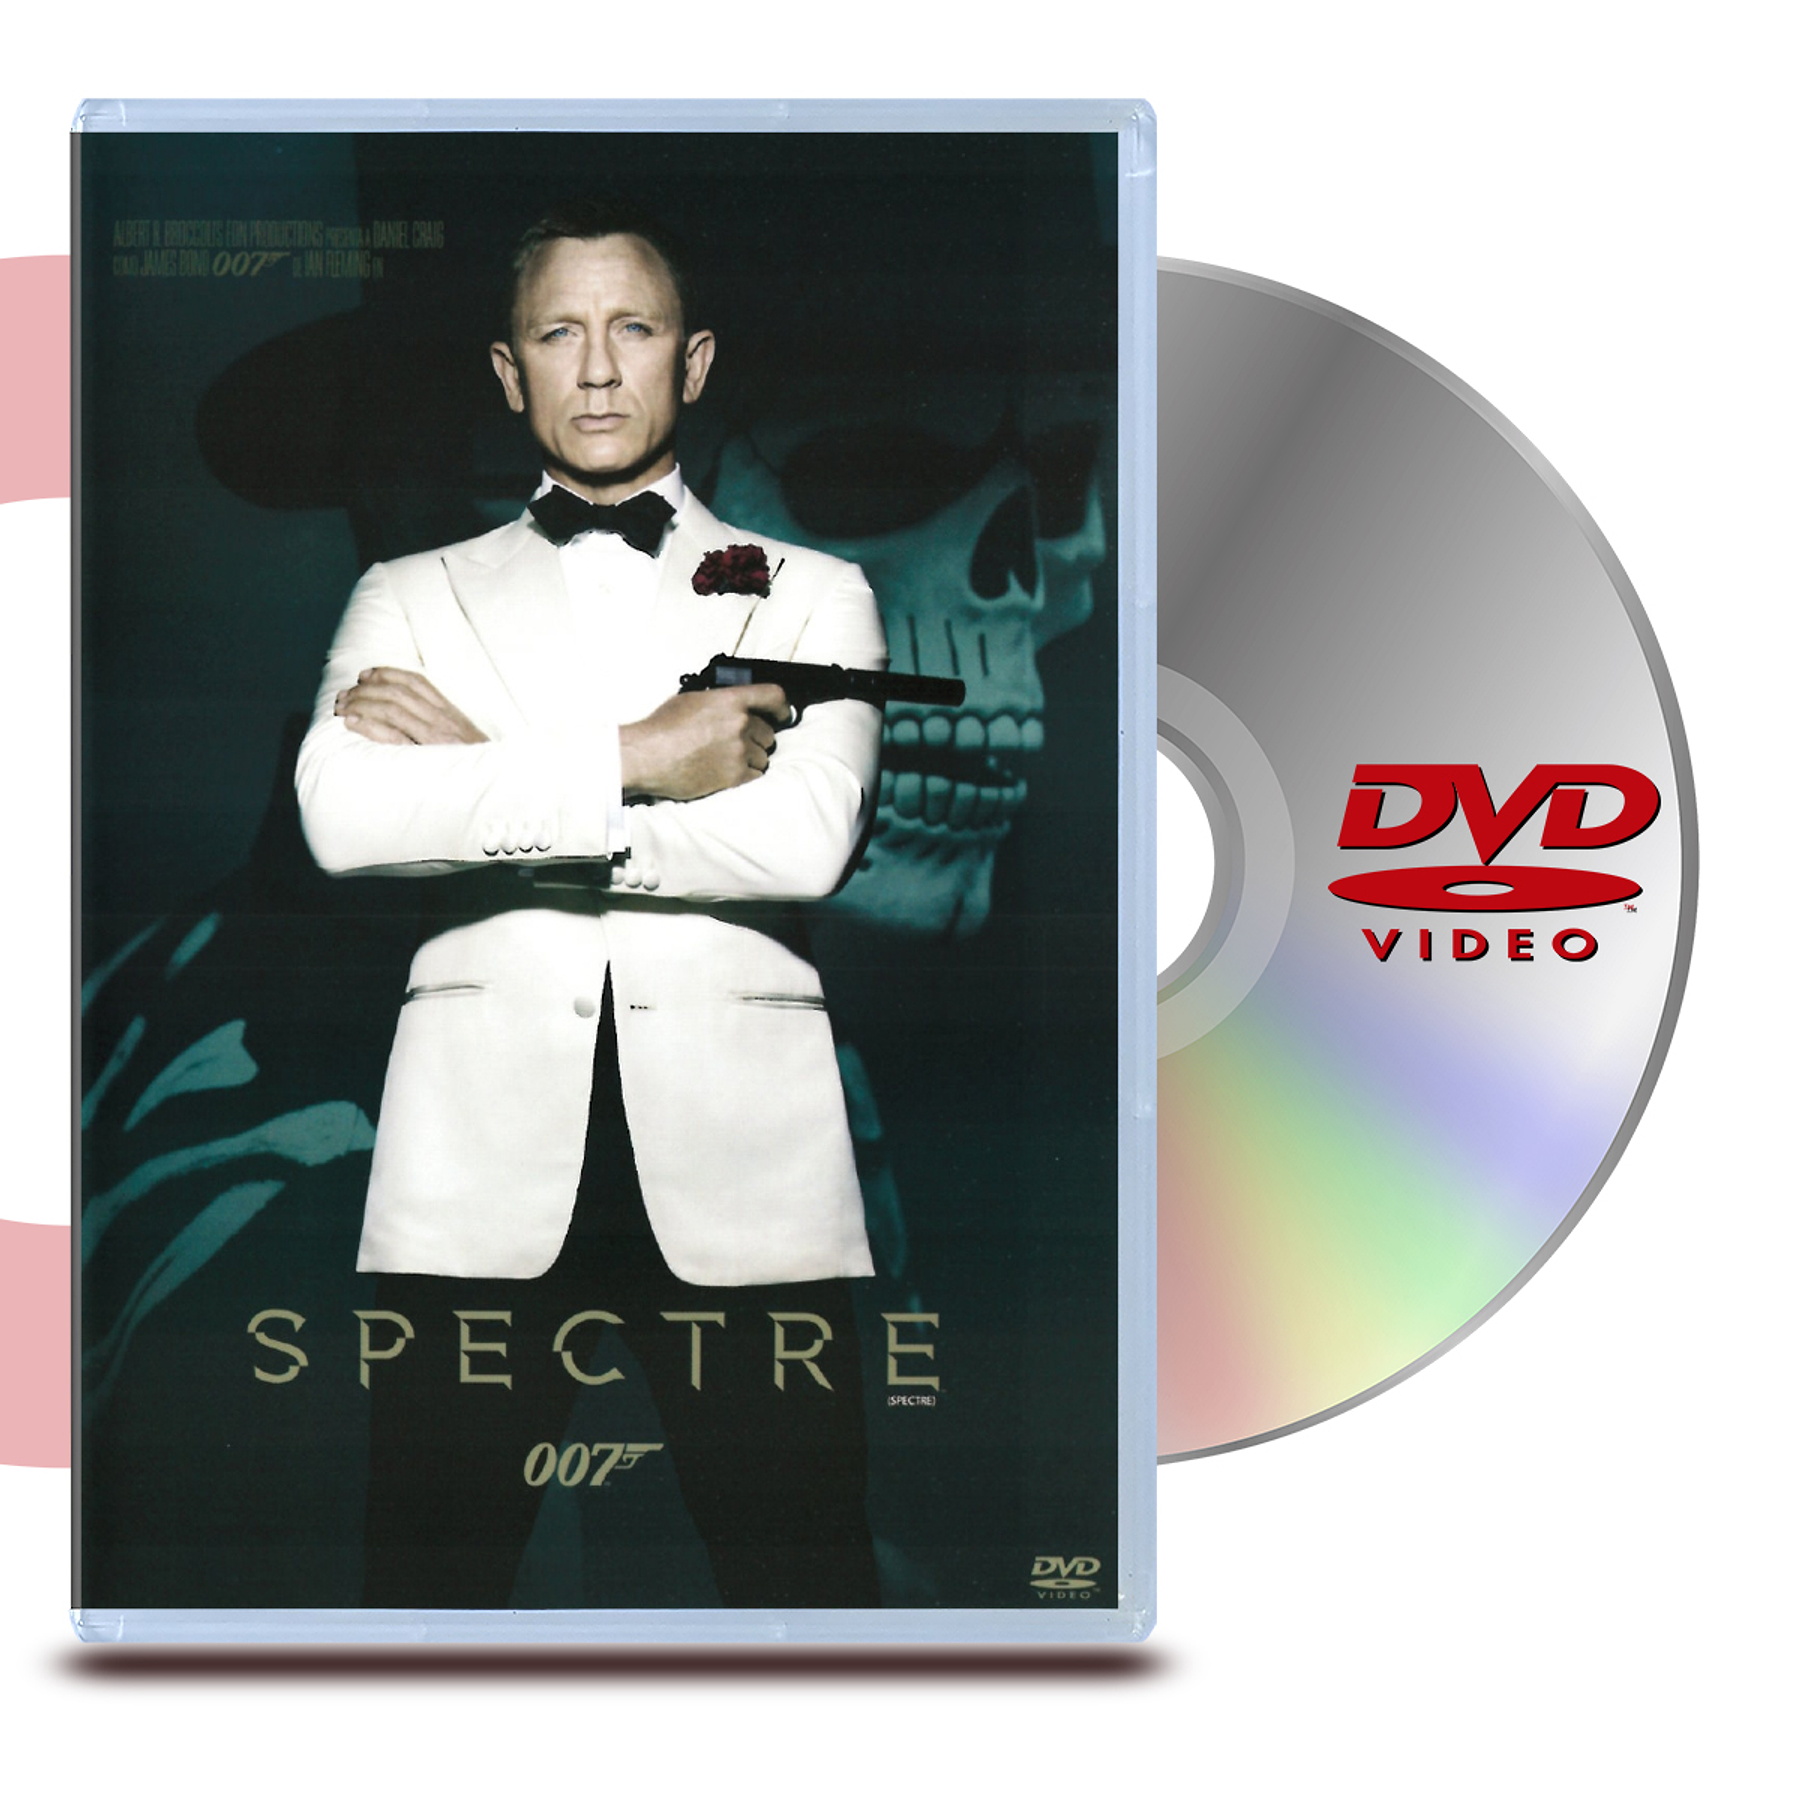 DVD SPECTRE